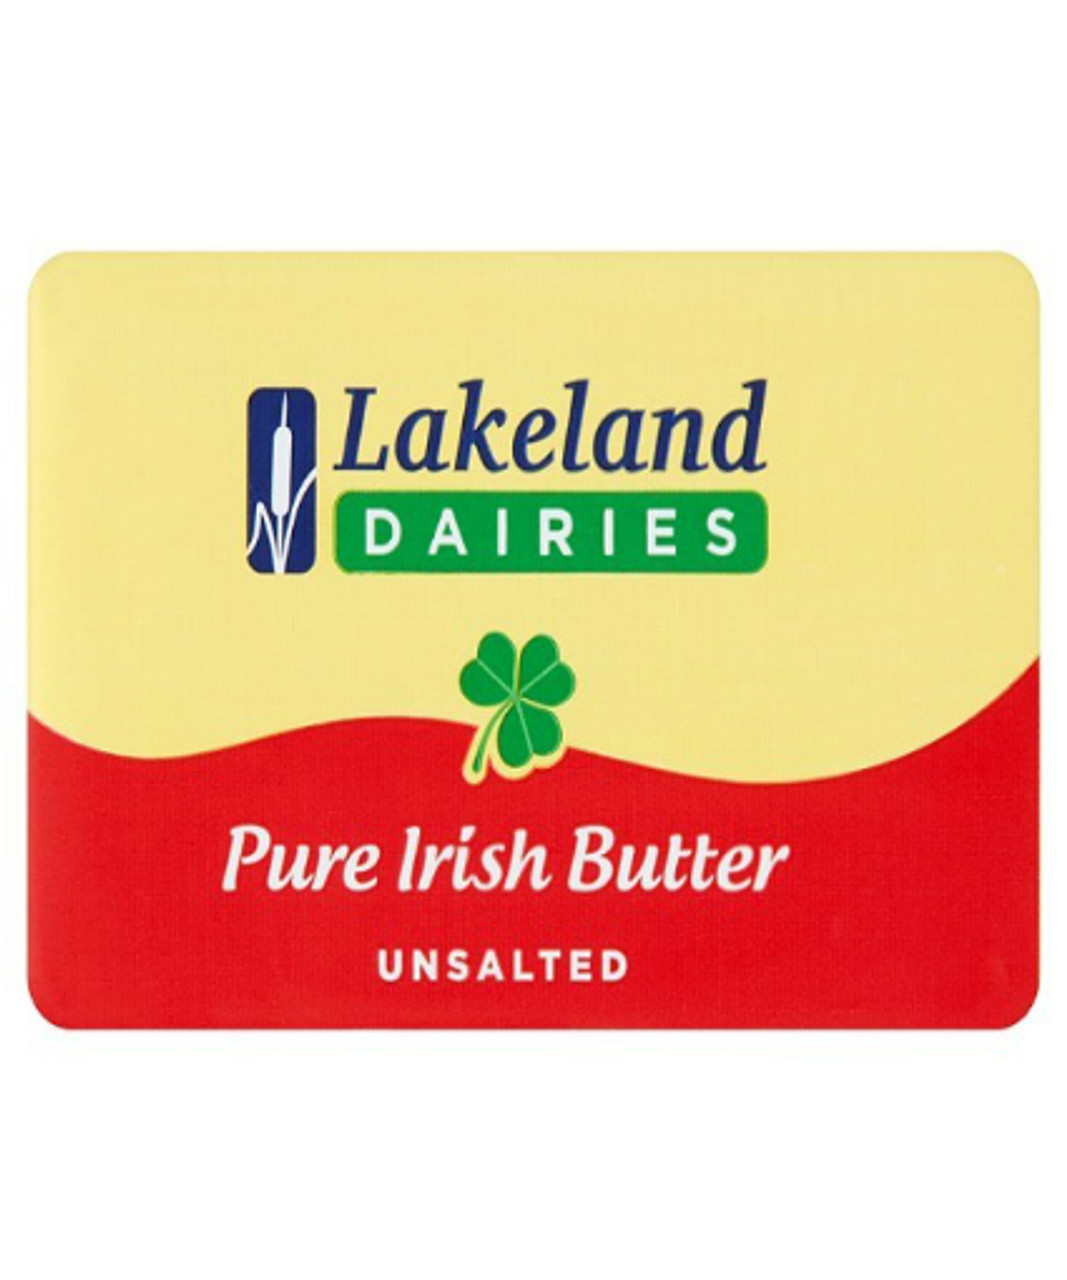 Pure Irish Butter Unsalted